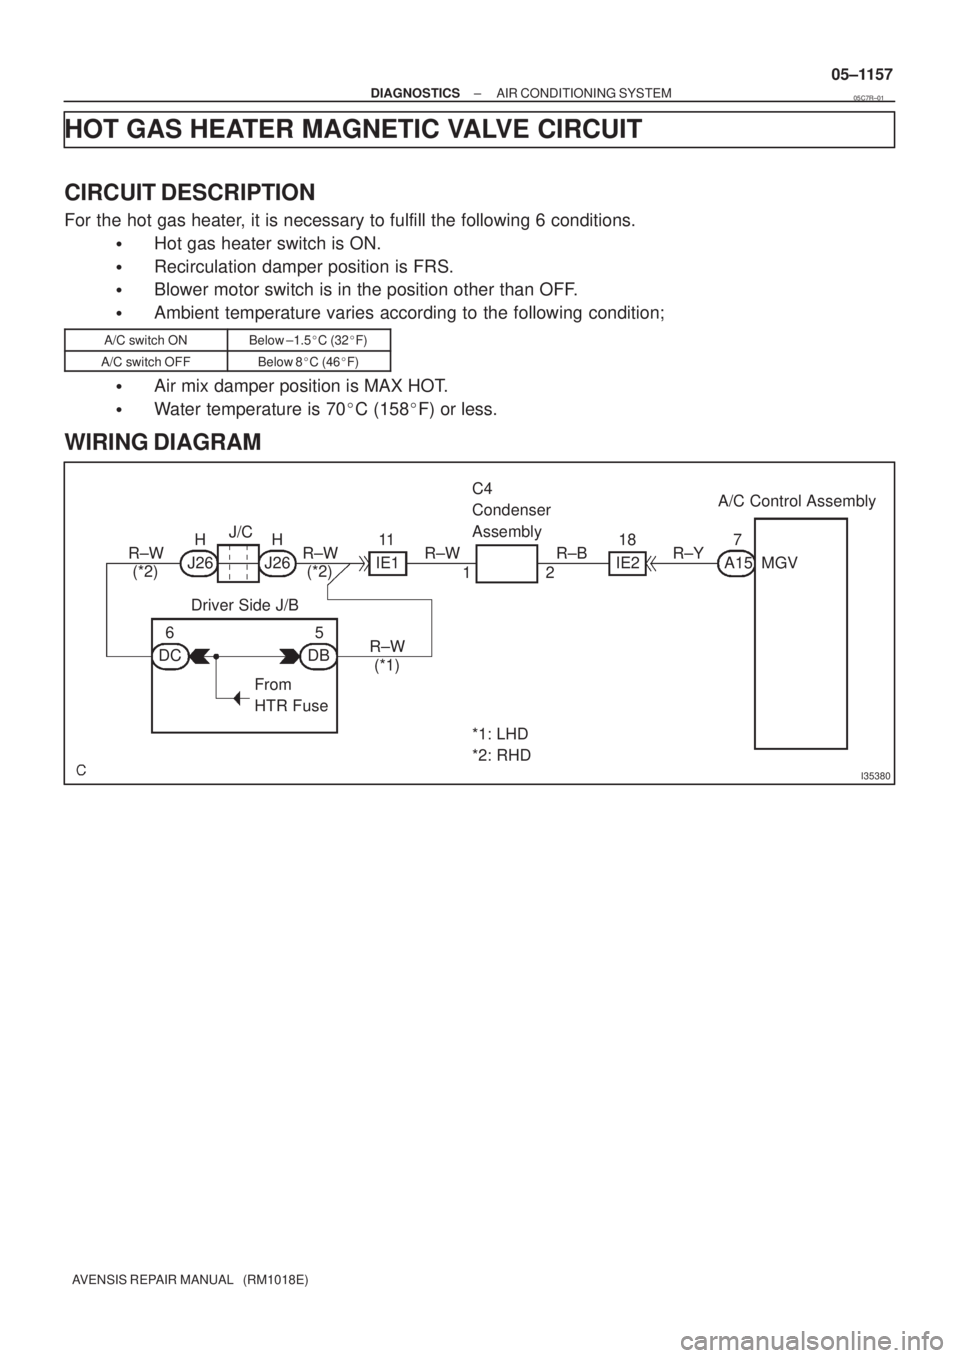 TOYOTA AVENSIS 2005  Service Repair Manual I35380
R±W
(*2)J26 J26HH
IE111
IE218
A157
MGV A/C Control Assembly
R±W
(*2)R±W R±B R±Y J/CC4
Condenser 
Assembly
12
Driver Side J/B
DC6
DB5
R±W
(*1)
From
HTR Fuse
*1: LHD
*2: RHD
± DIAGNOSTICSA